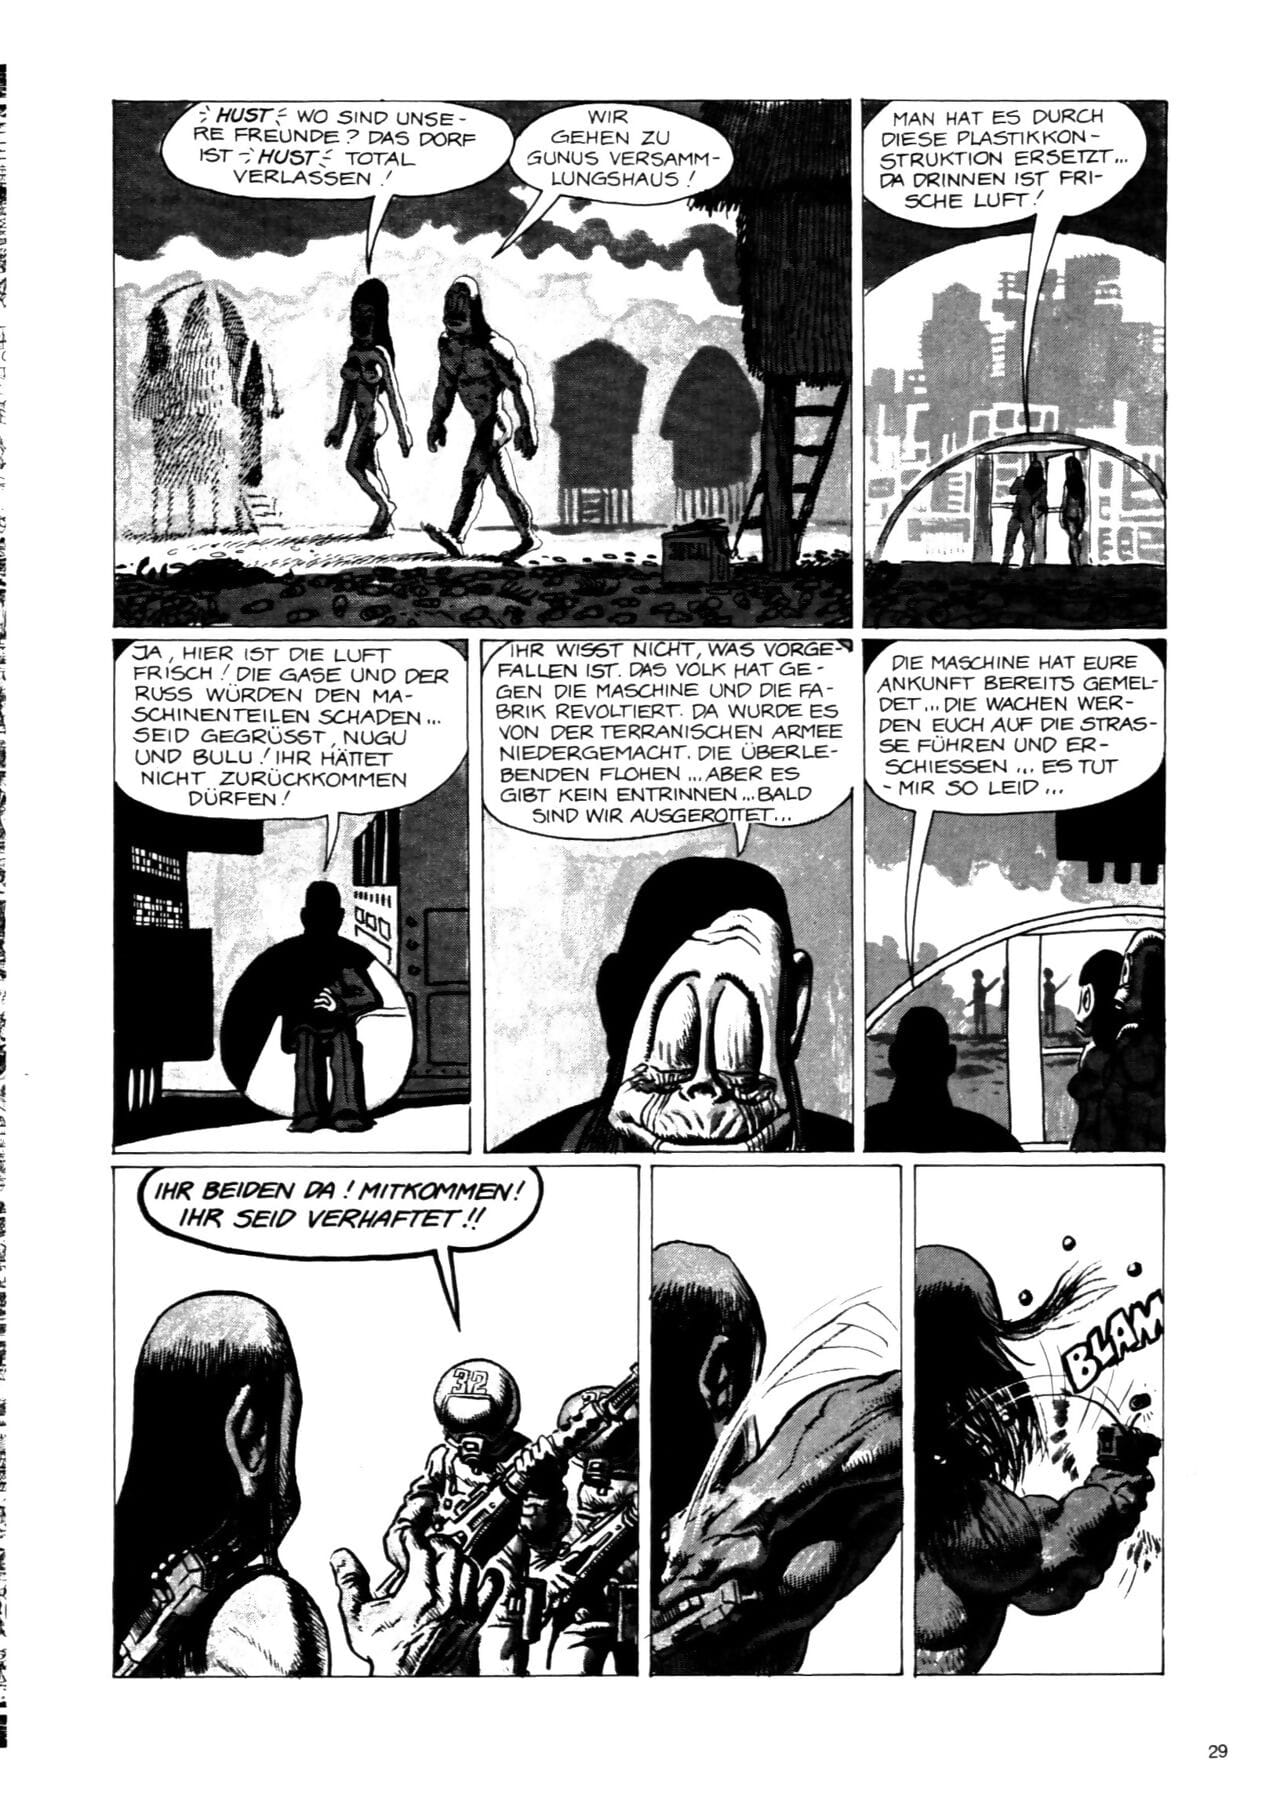 Schwermetall #054 parte 2 page 1